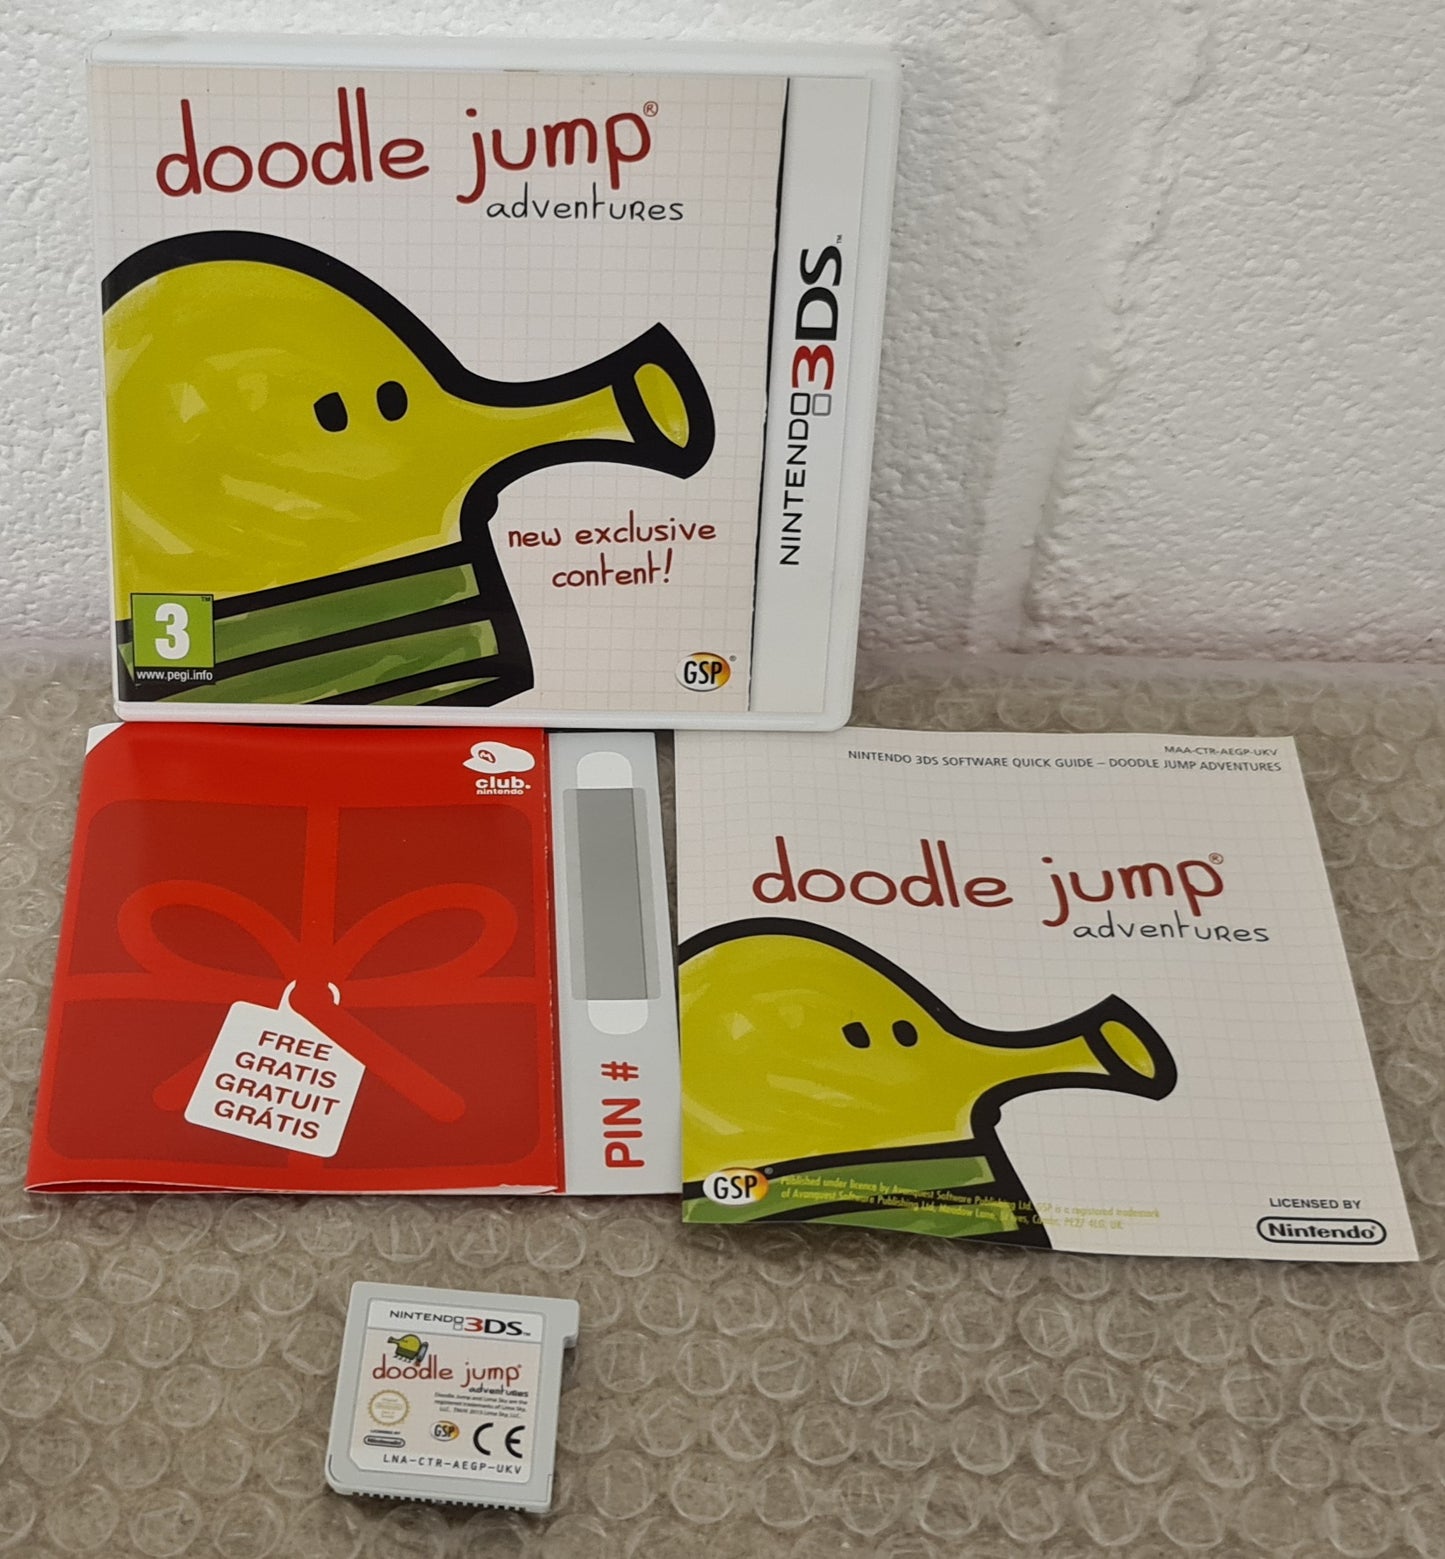 Doodle Jump Adventures Nintendo 3DS Game